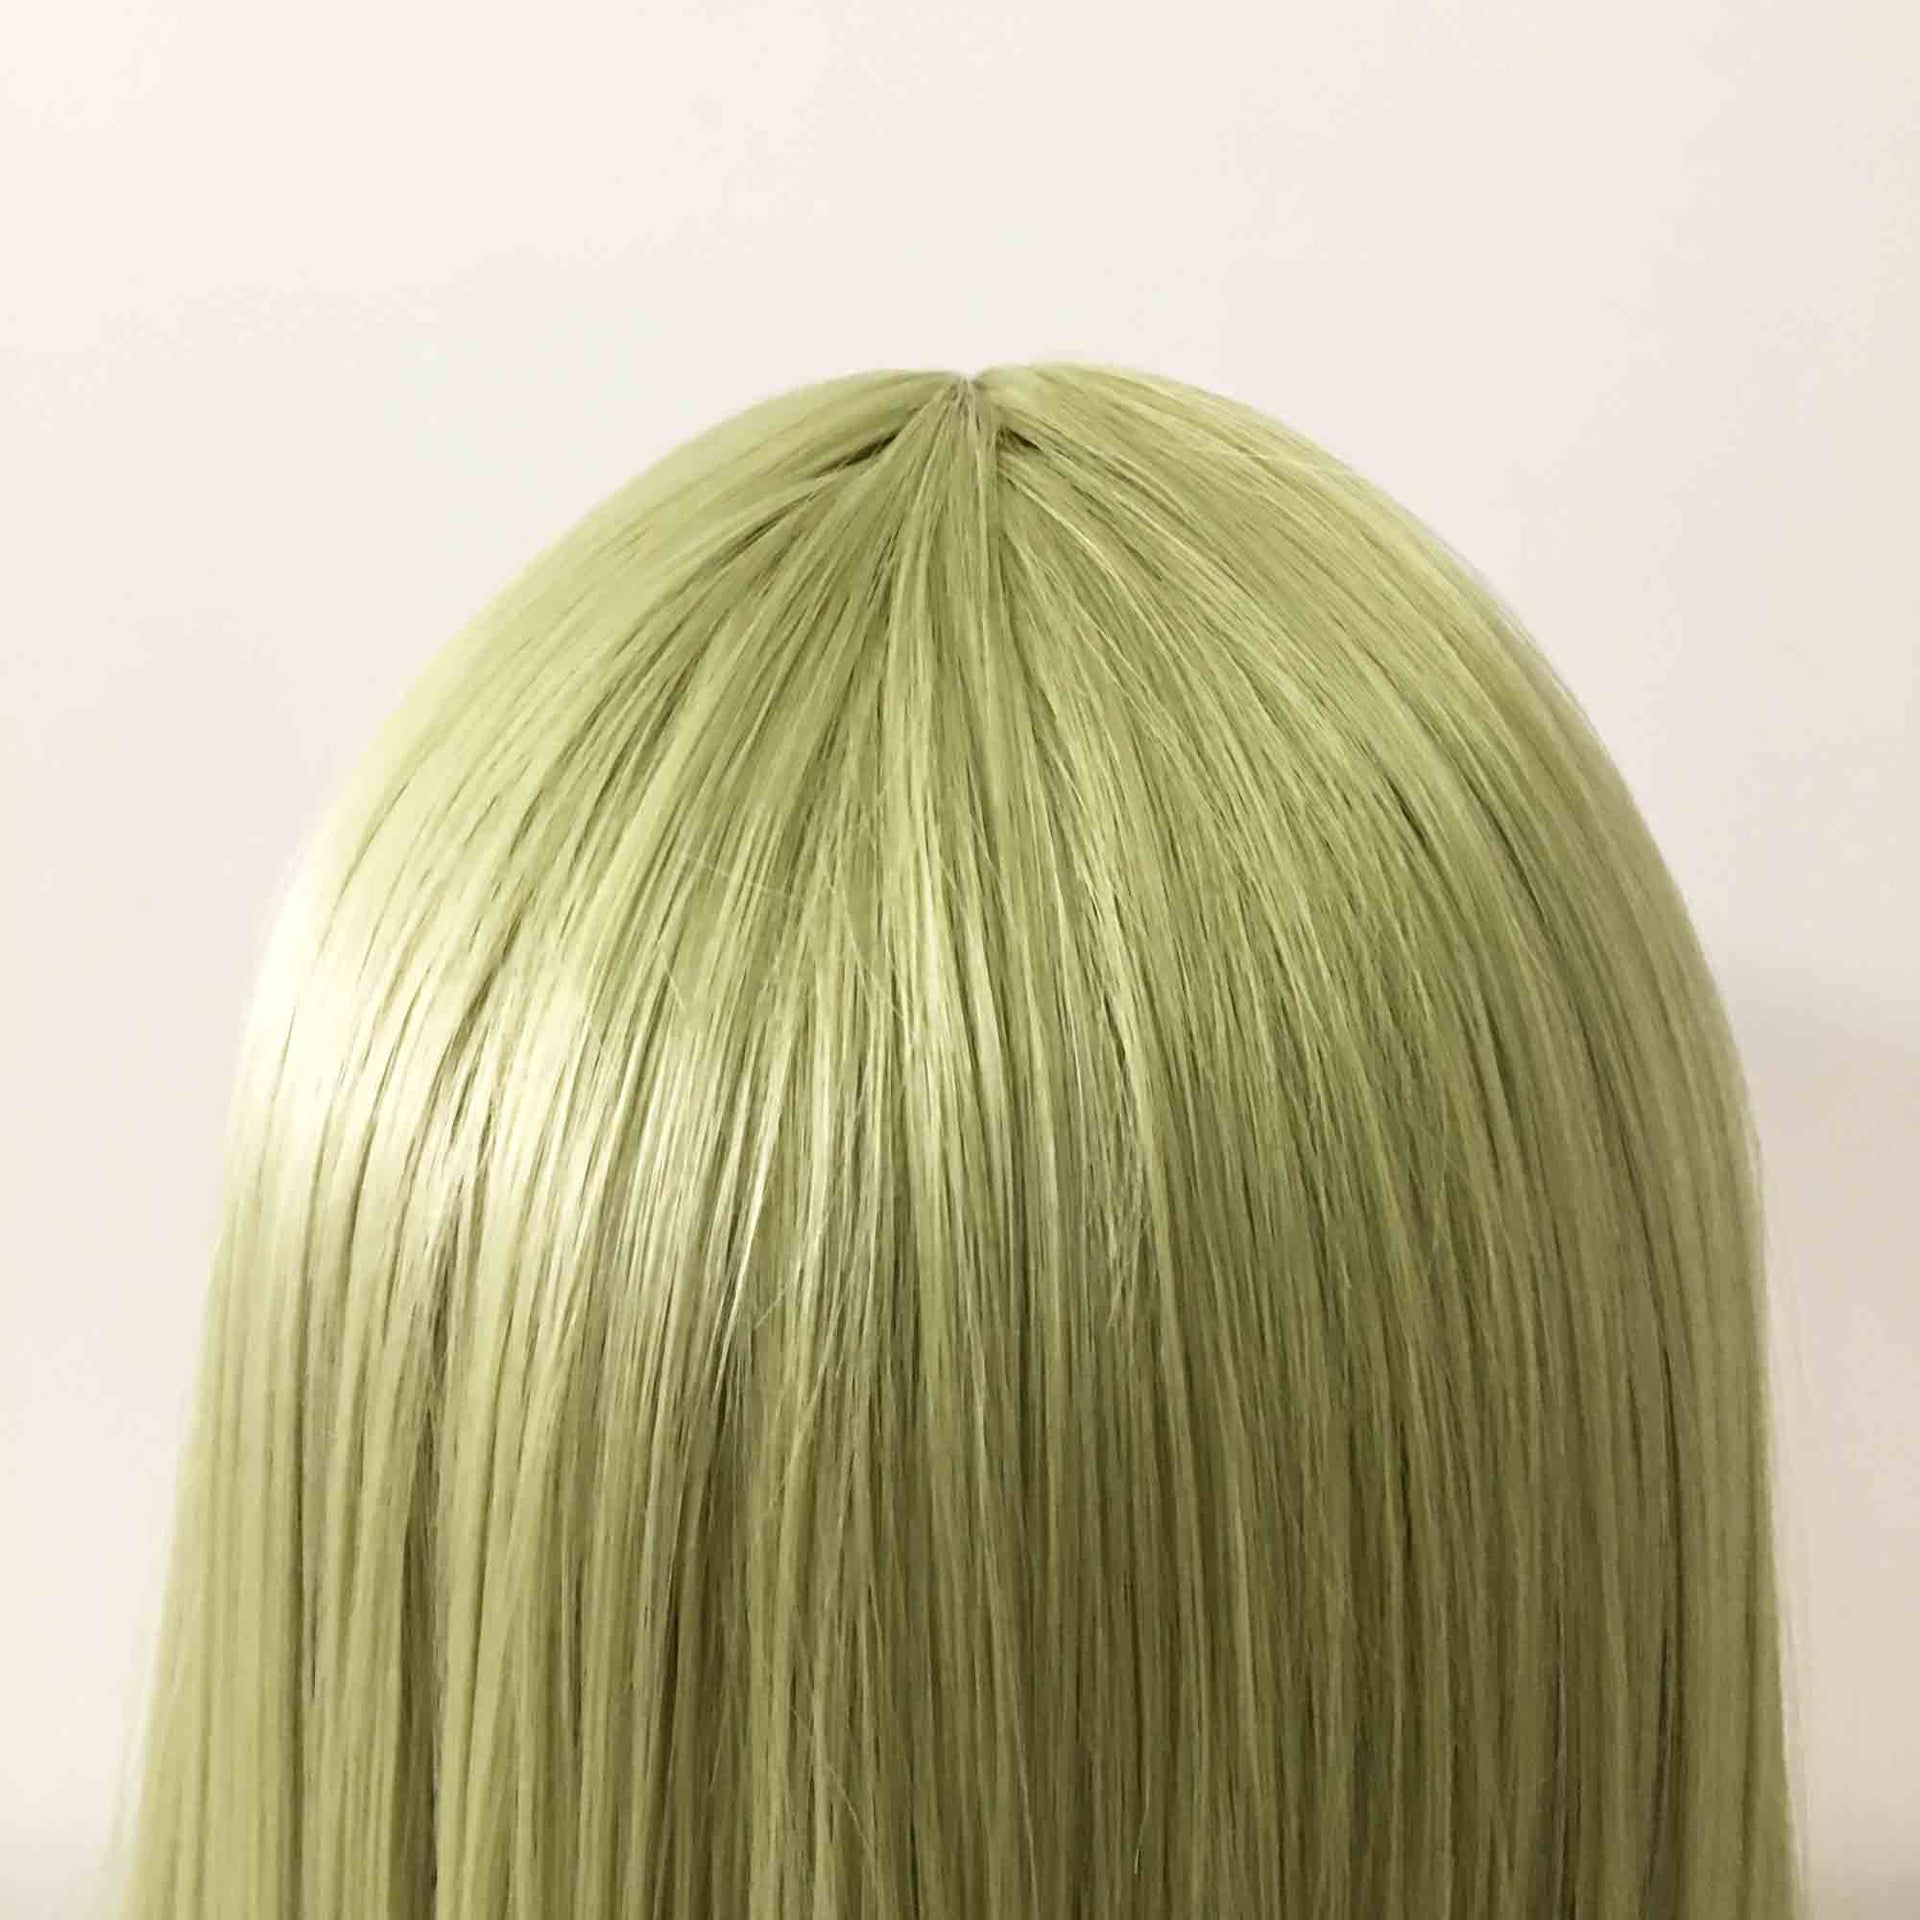 nevermindyrhead Women Green Long Straight Fringe Bangs Blunt End Wig